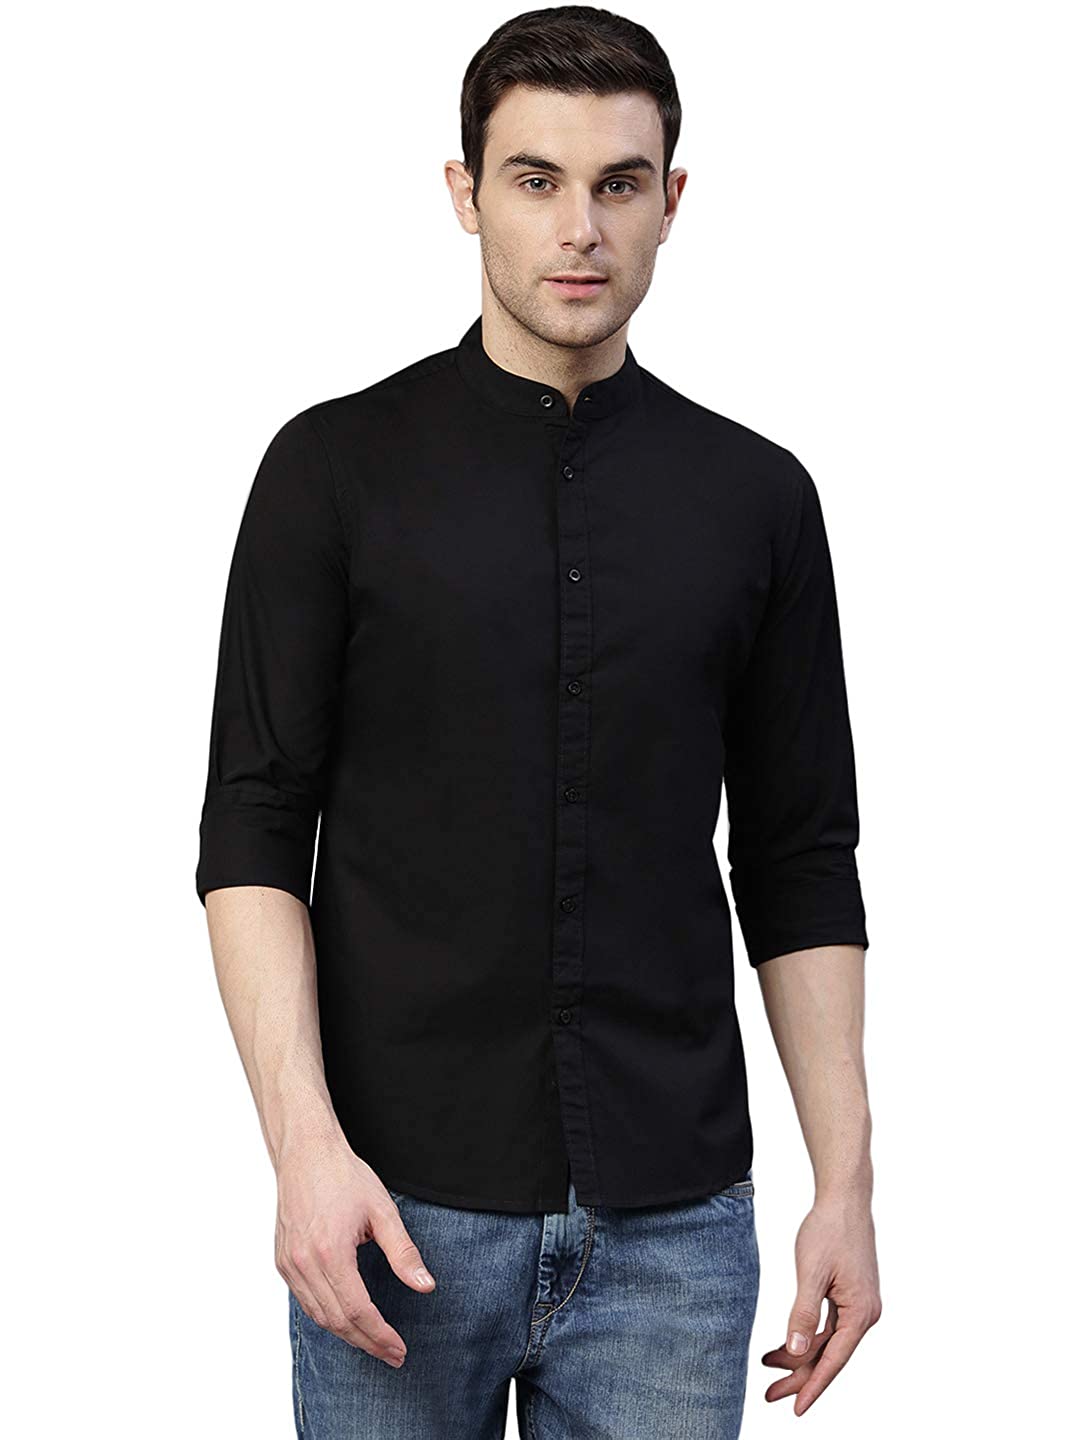 black collarless shirt